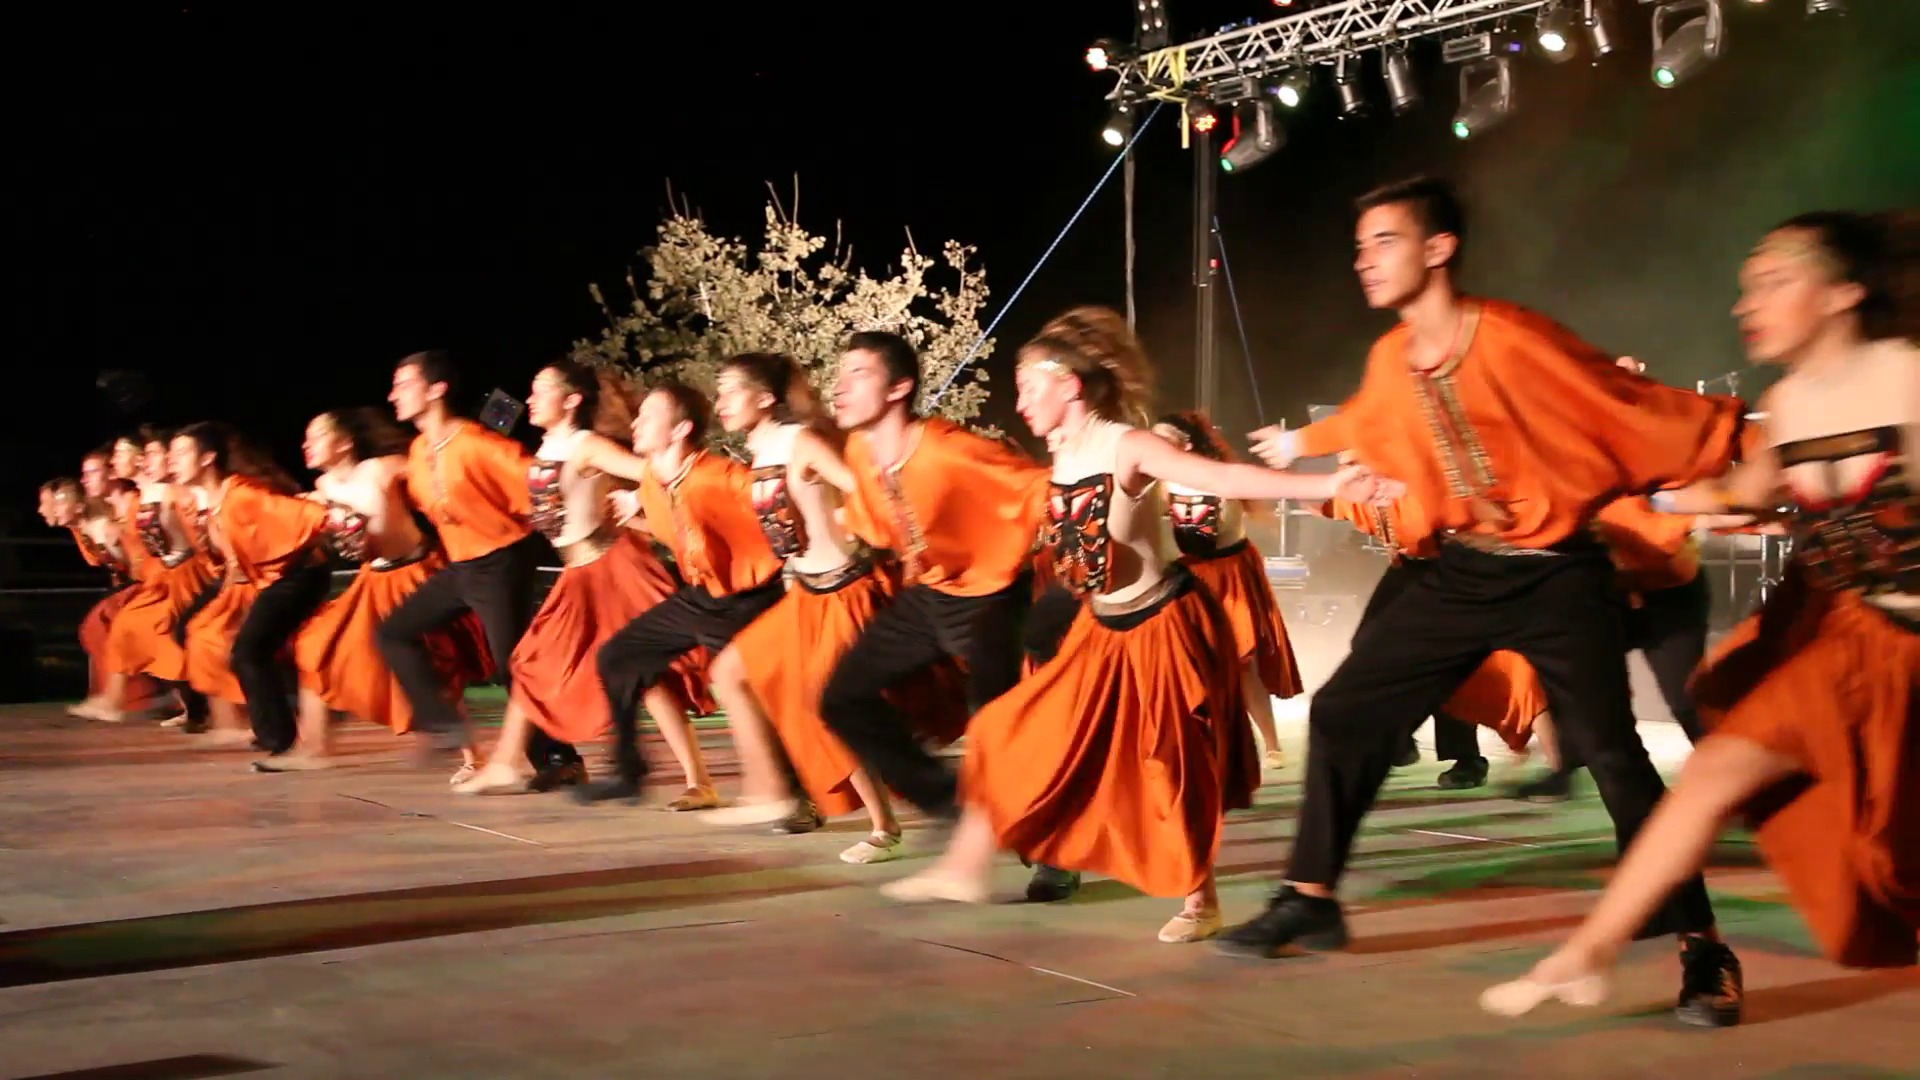 Israeli Dancing Png - Dancers Perform Nostalgic Israeli Folk Dances During Harvest Festival In Celebration Of 70 Years Of Dancing In Kibbutz Dalia. Photographed With Permission., Transparent background PNG HD thumbnail